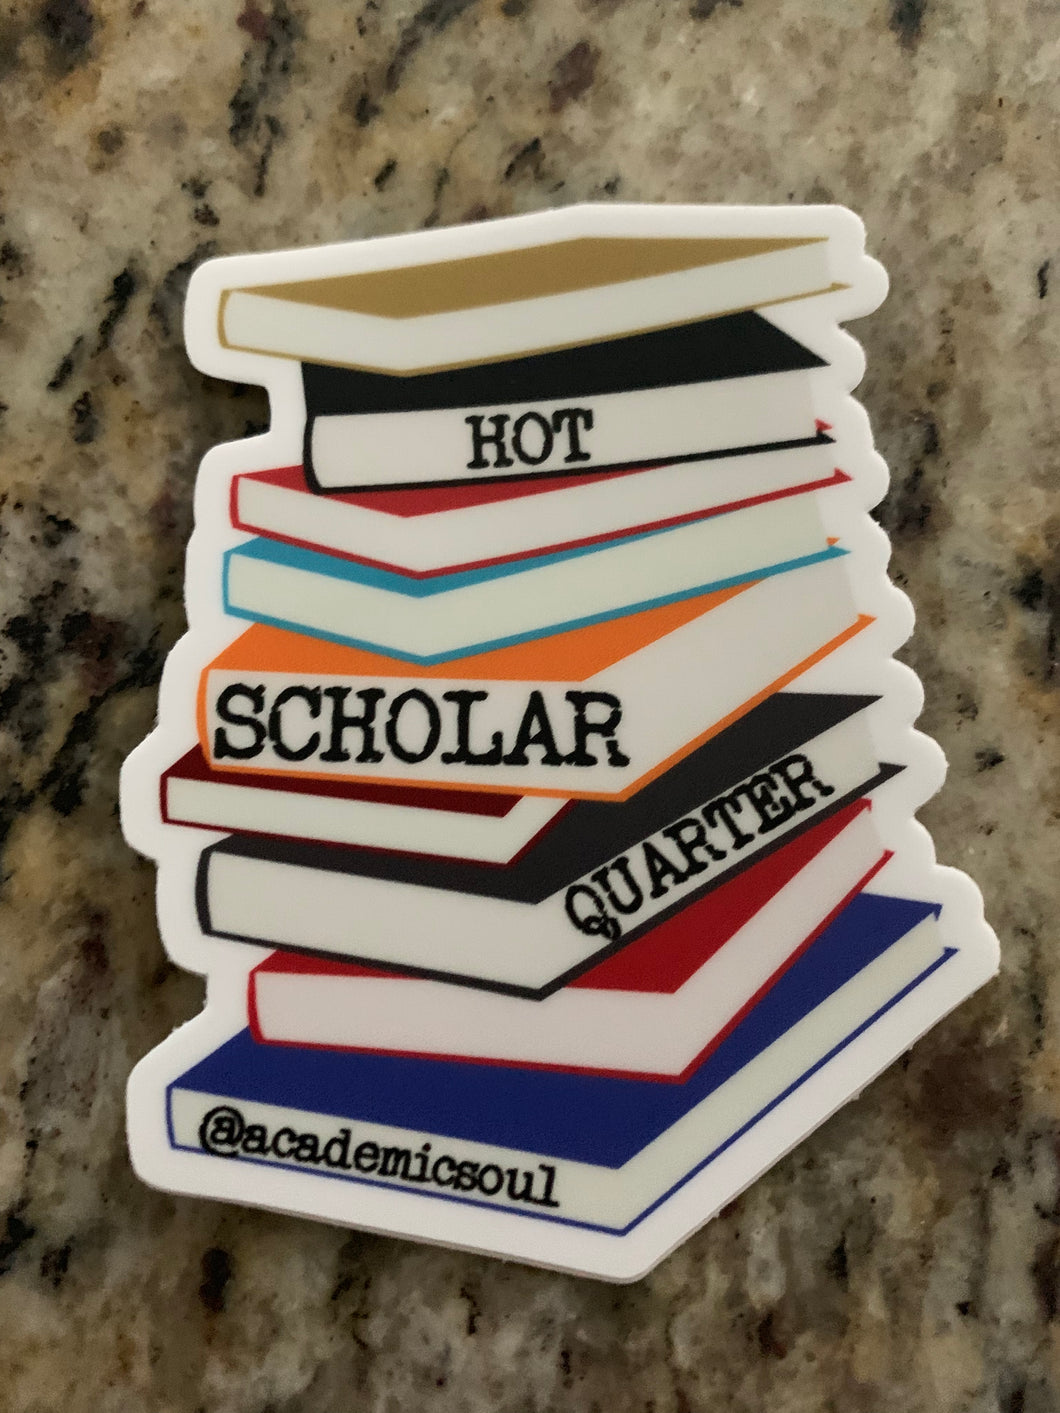 Academic Soul's Hot Scholar Quarter